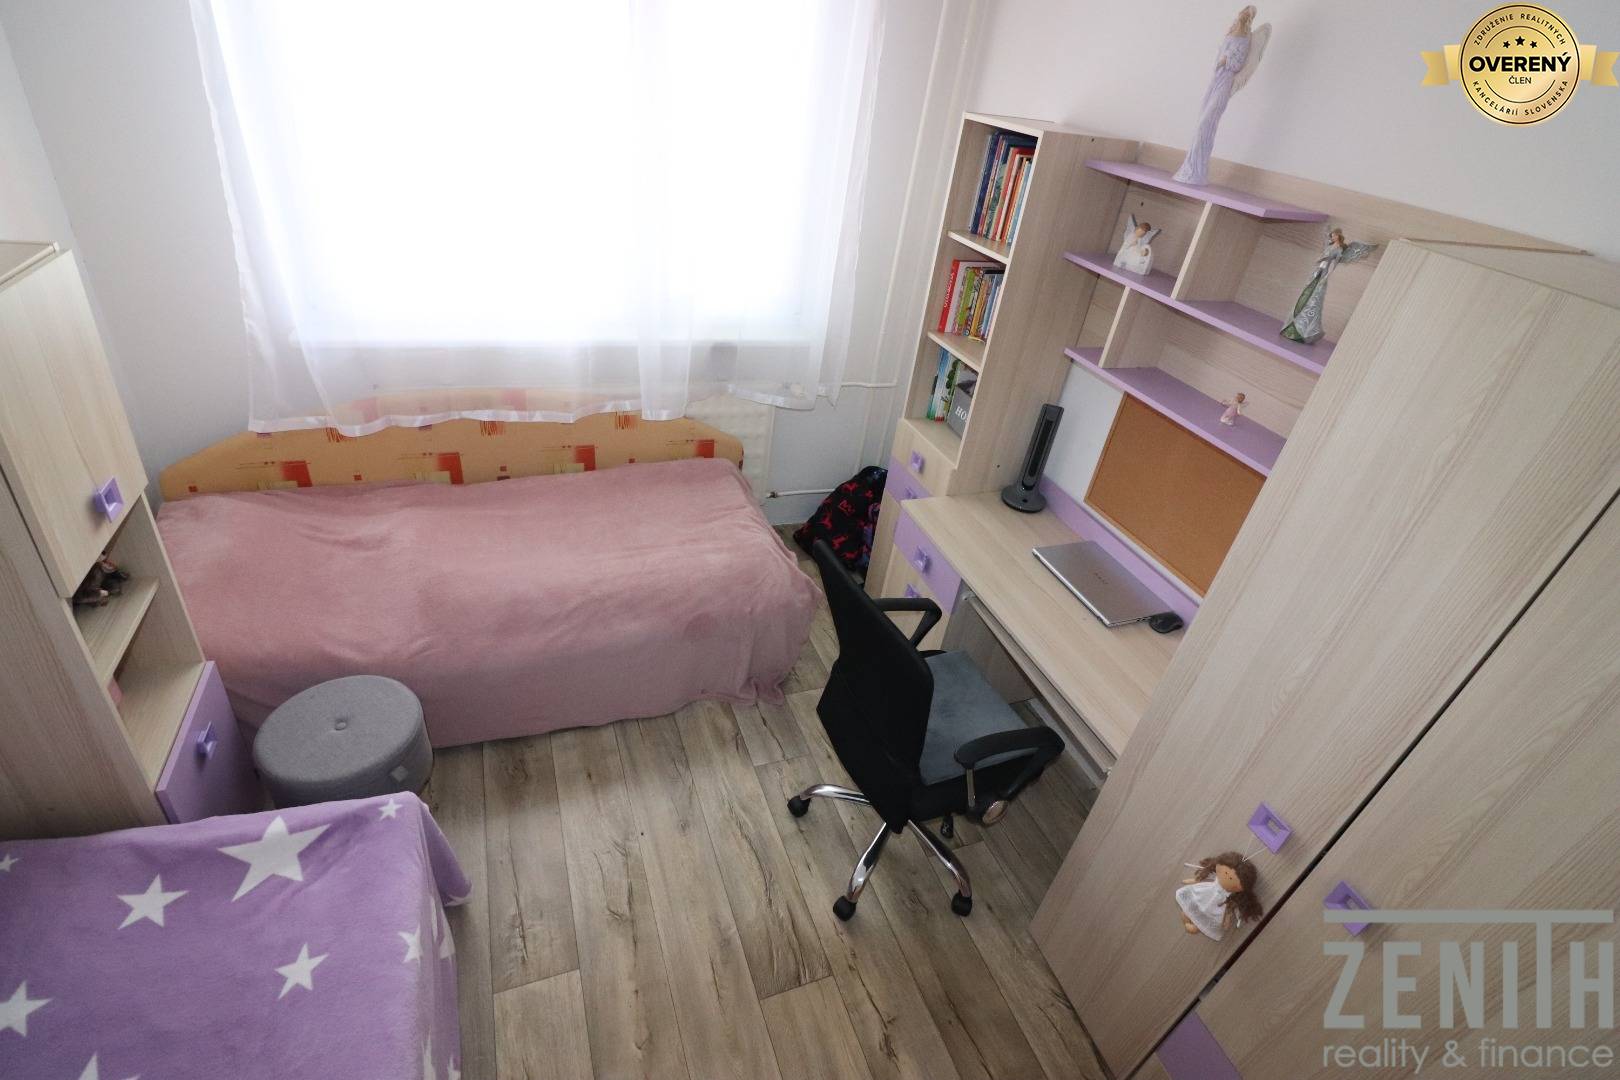 One bedroom apartment, Centrum 2, Sale, Ilava, Slovakia